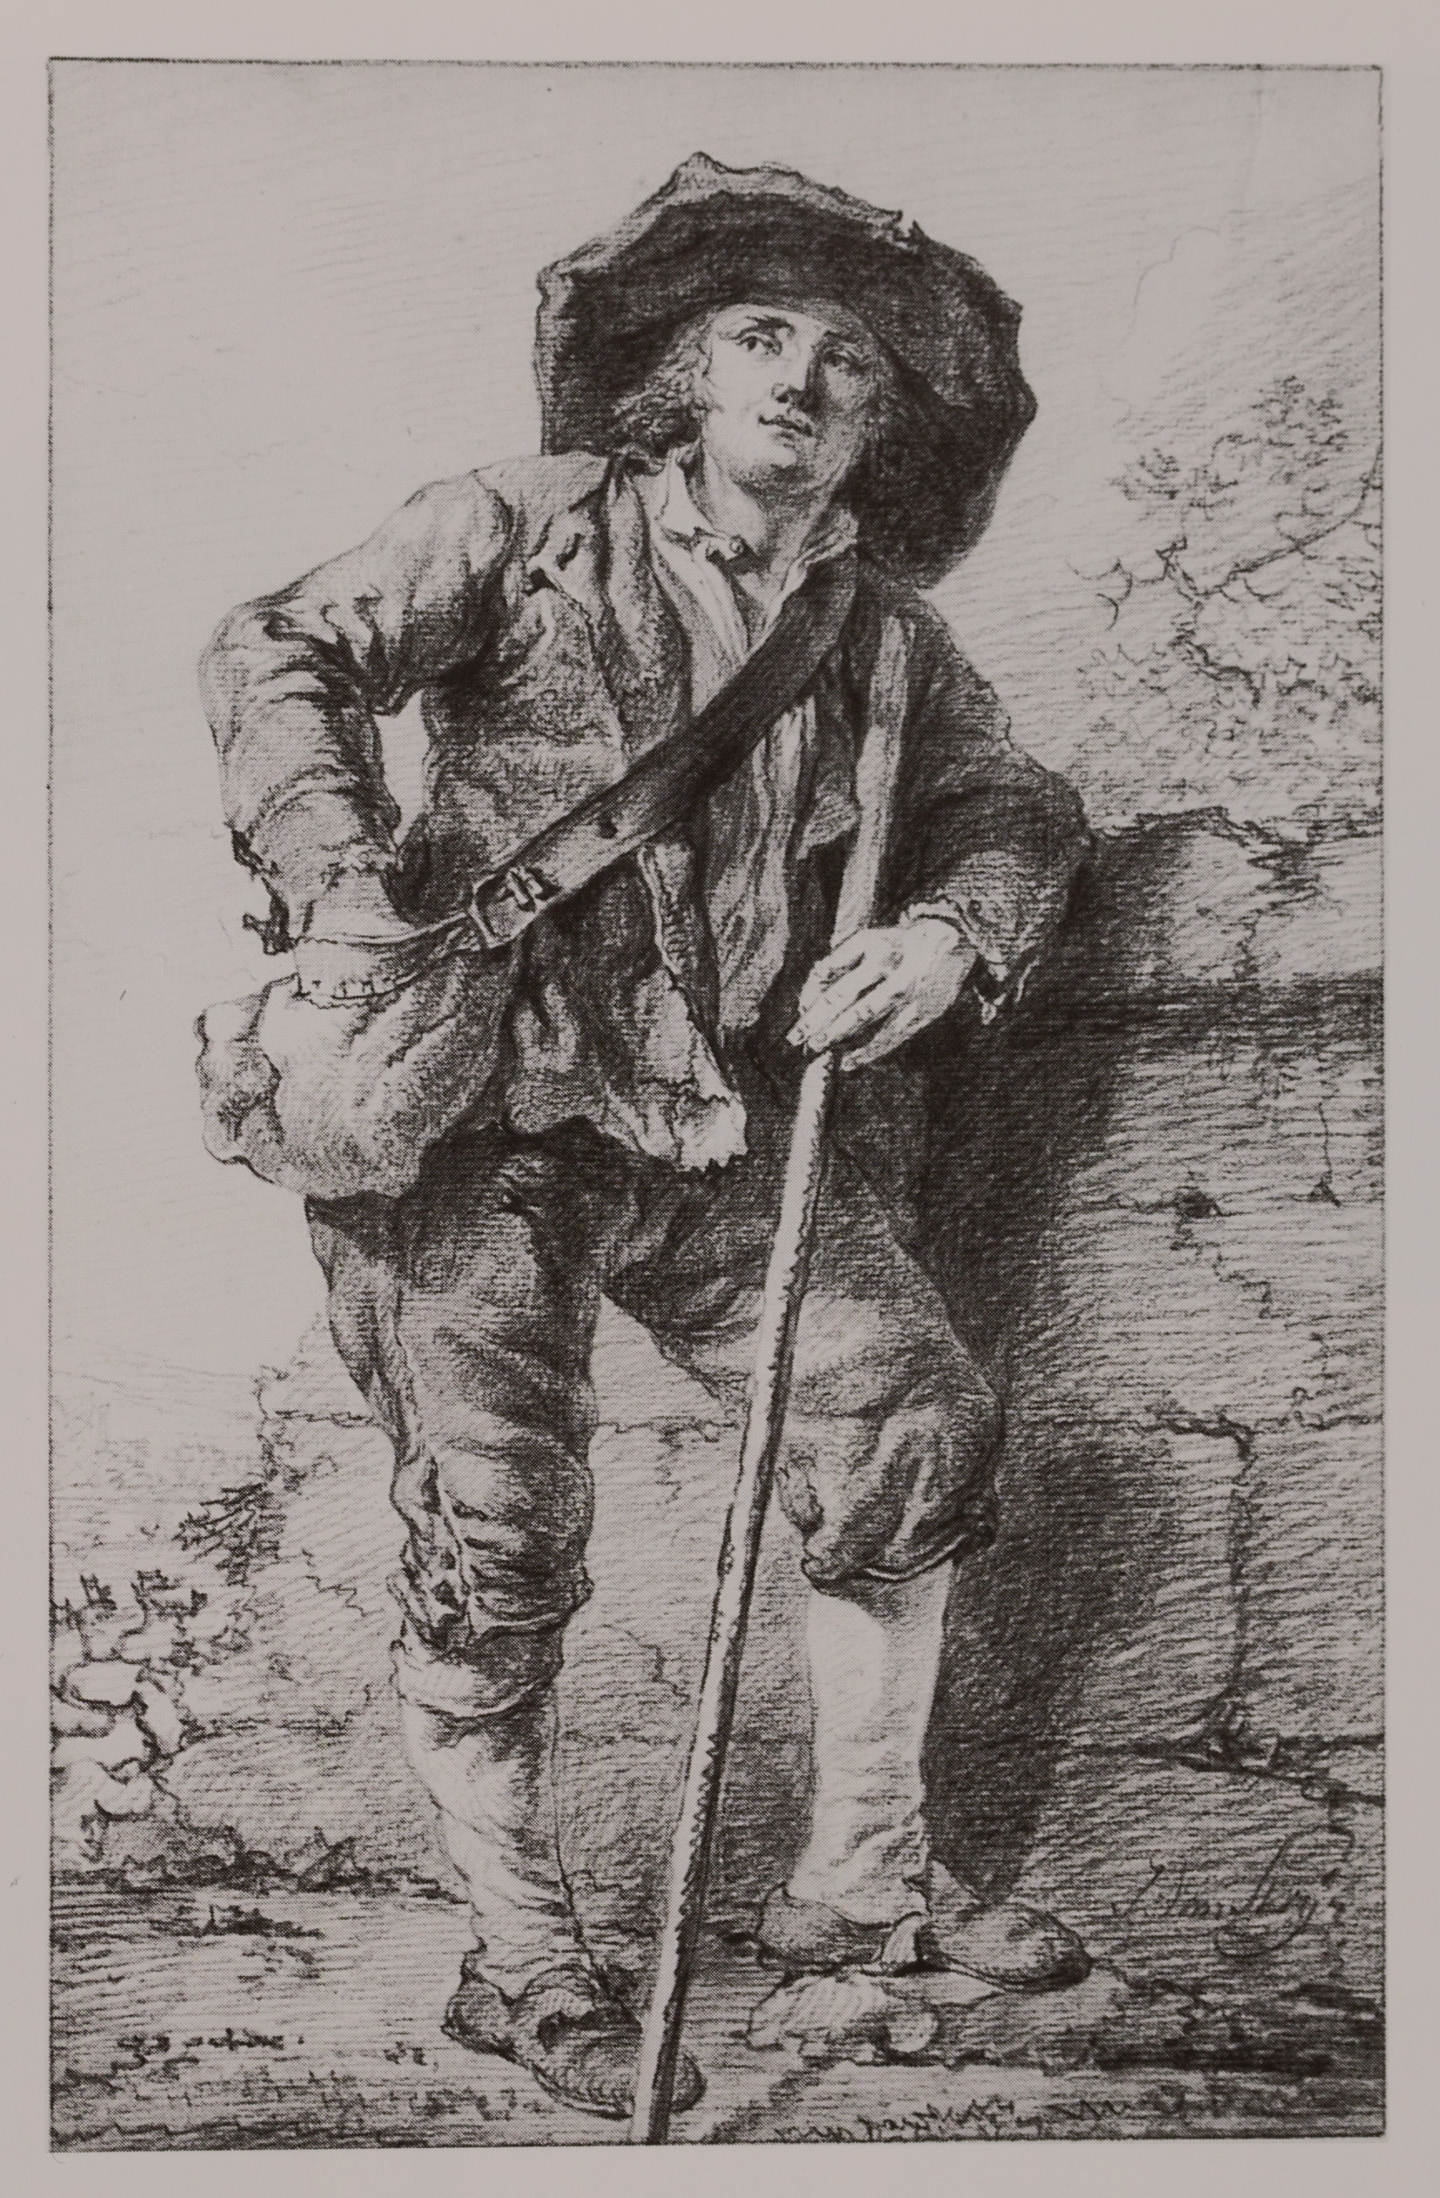 Jacob van Strij (Dordrecht, 1756 - 1815) Man sitting on a wheelbarrow with a beer keg (c. 1787)